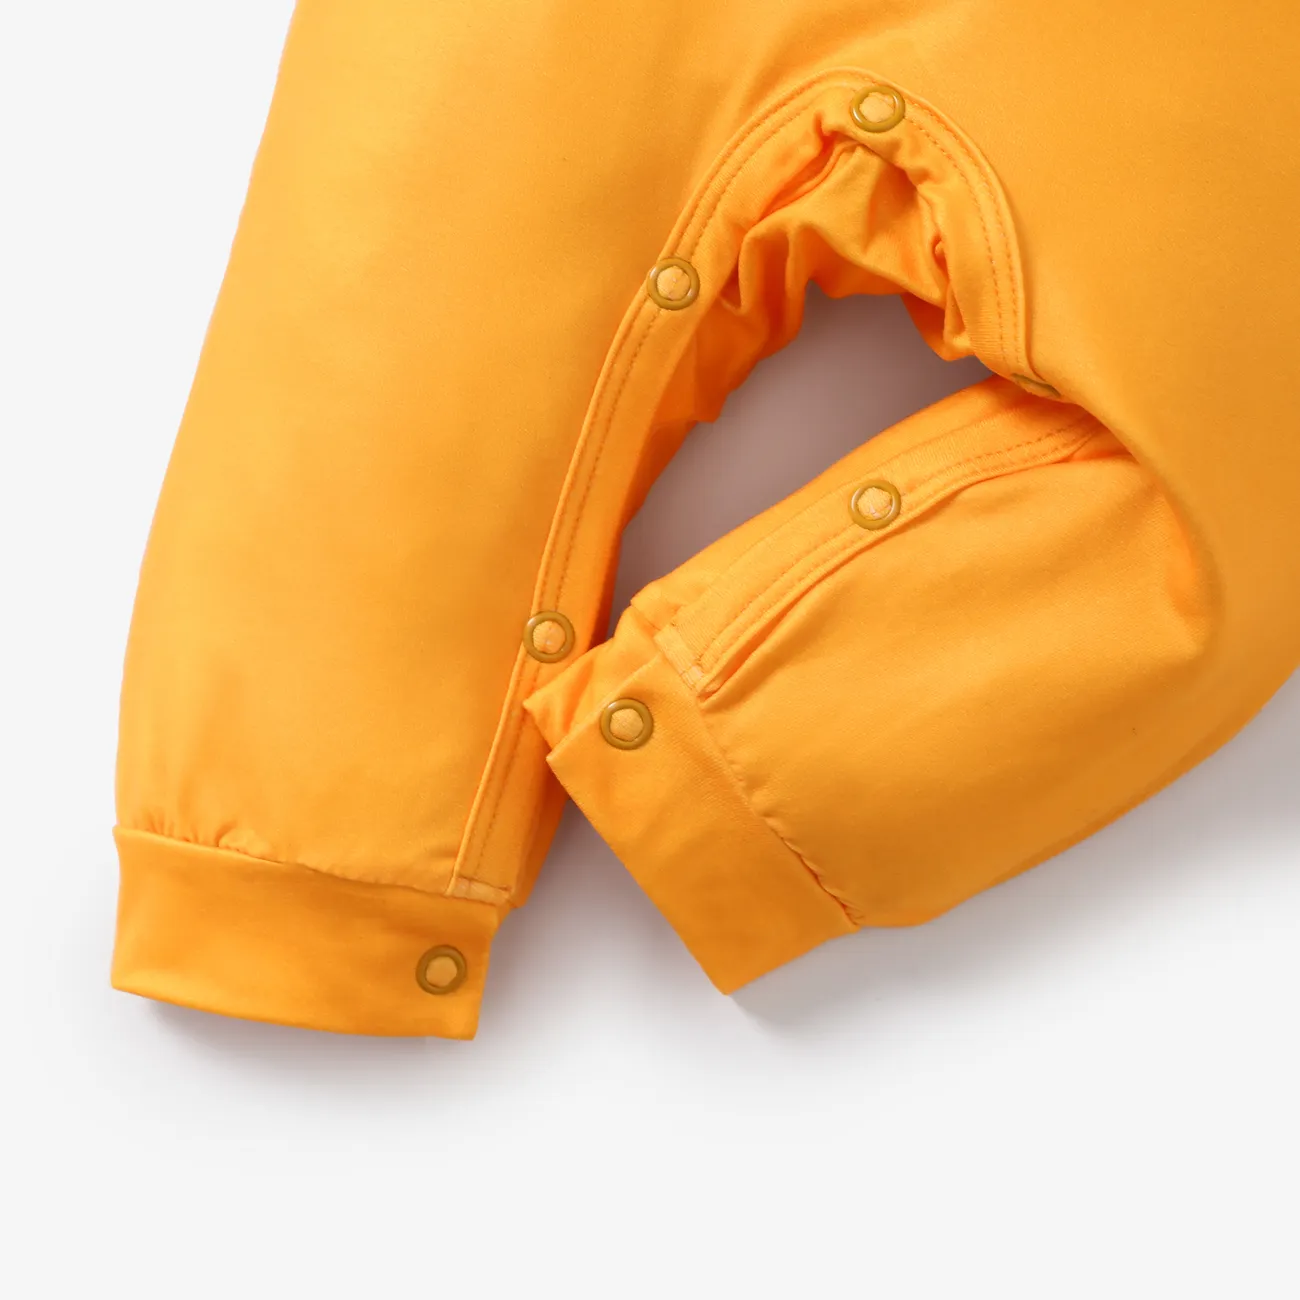 Baby Boy/Girl  Childlike Animal Print Button Long Sleeves Jumpsuit Yellow big image 1